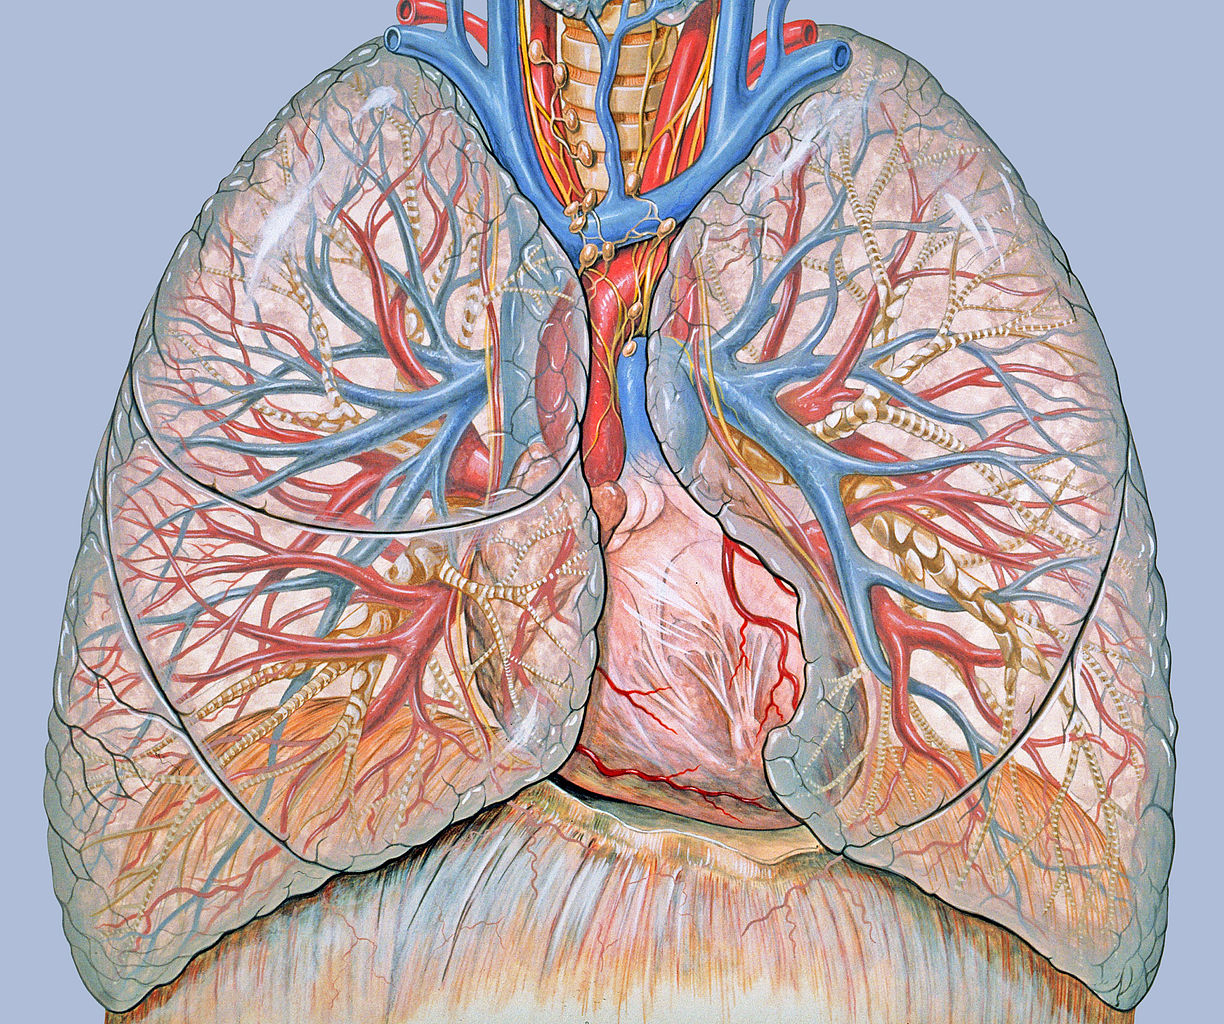 Tüdődaganatok, tüdőrák tünetei, kivizsgálása